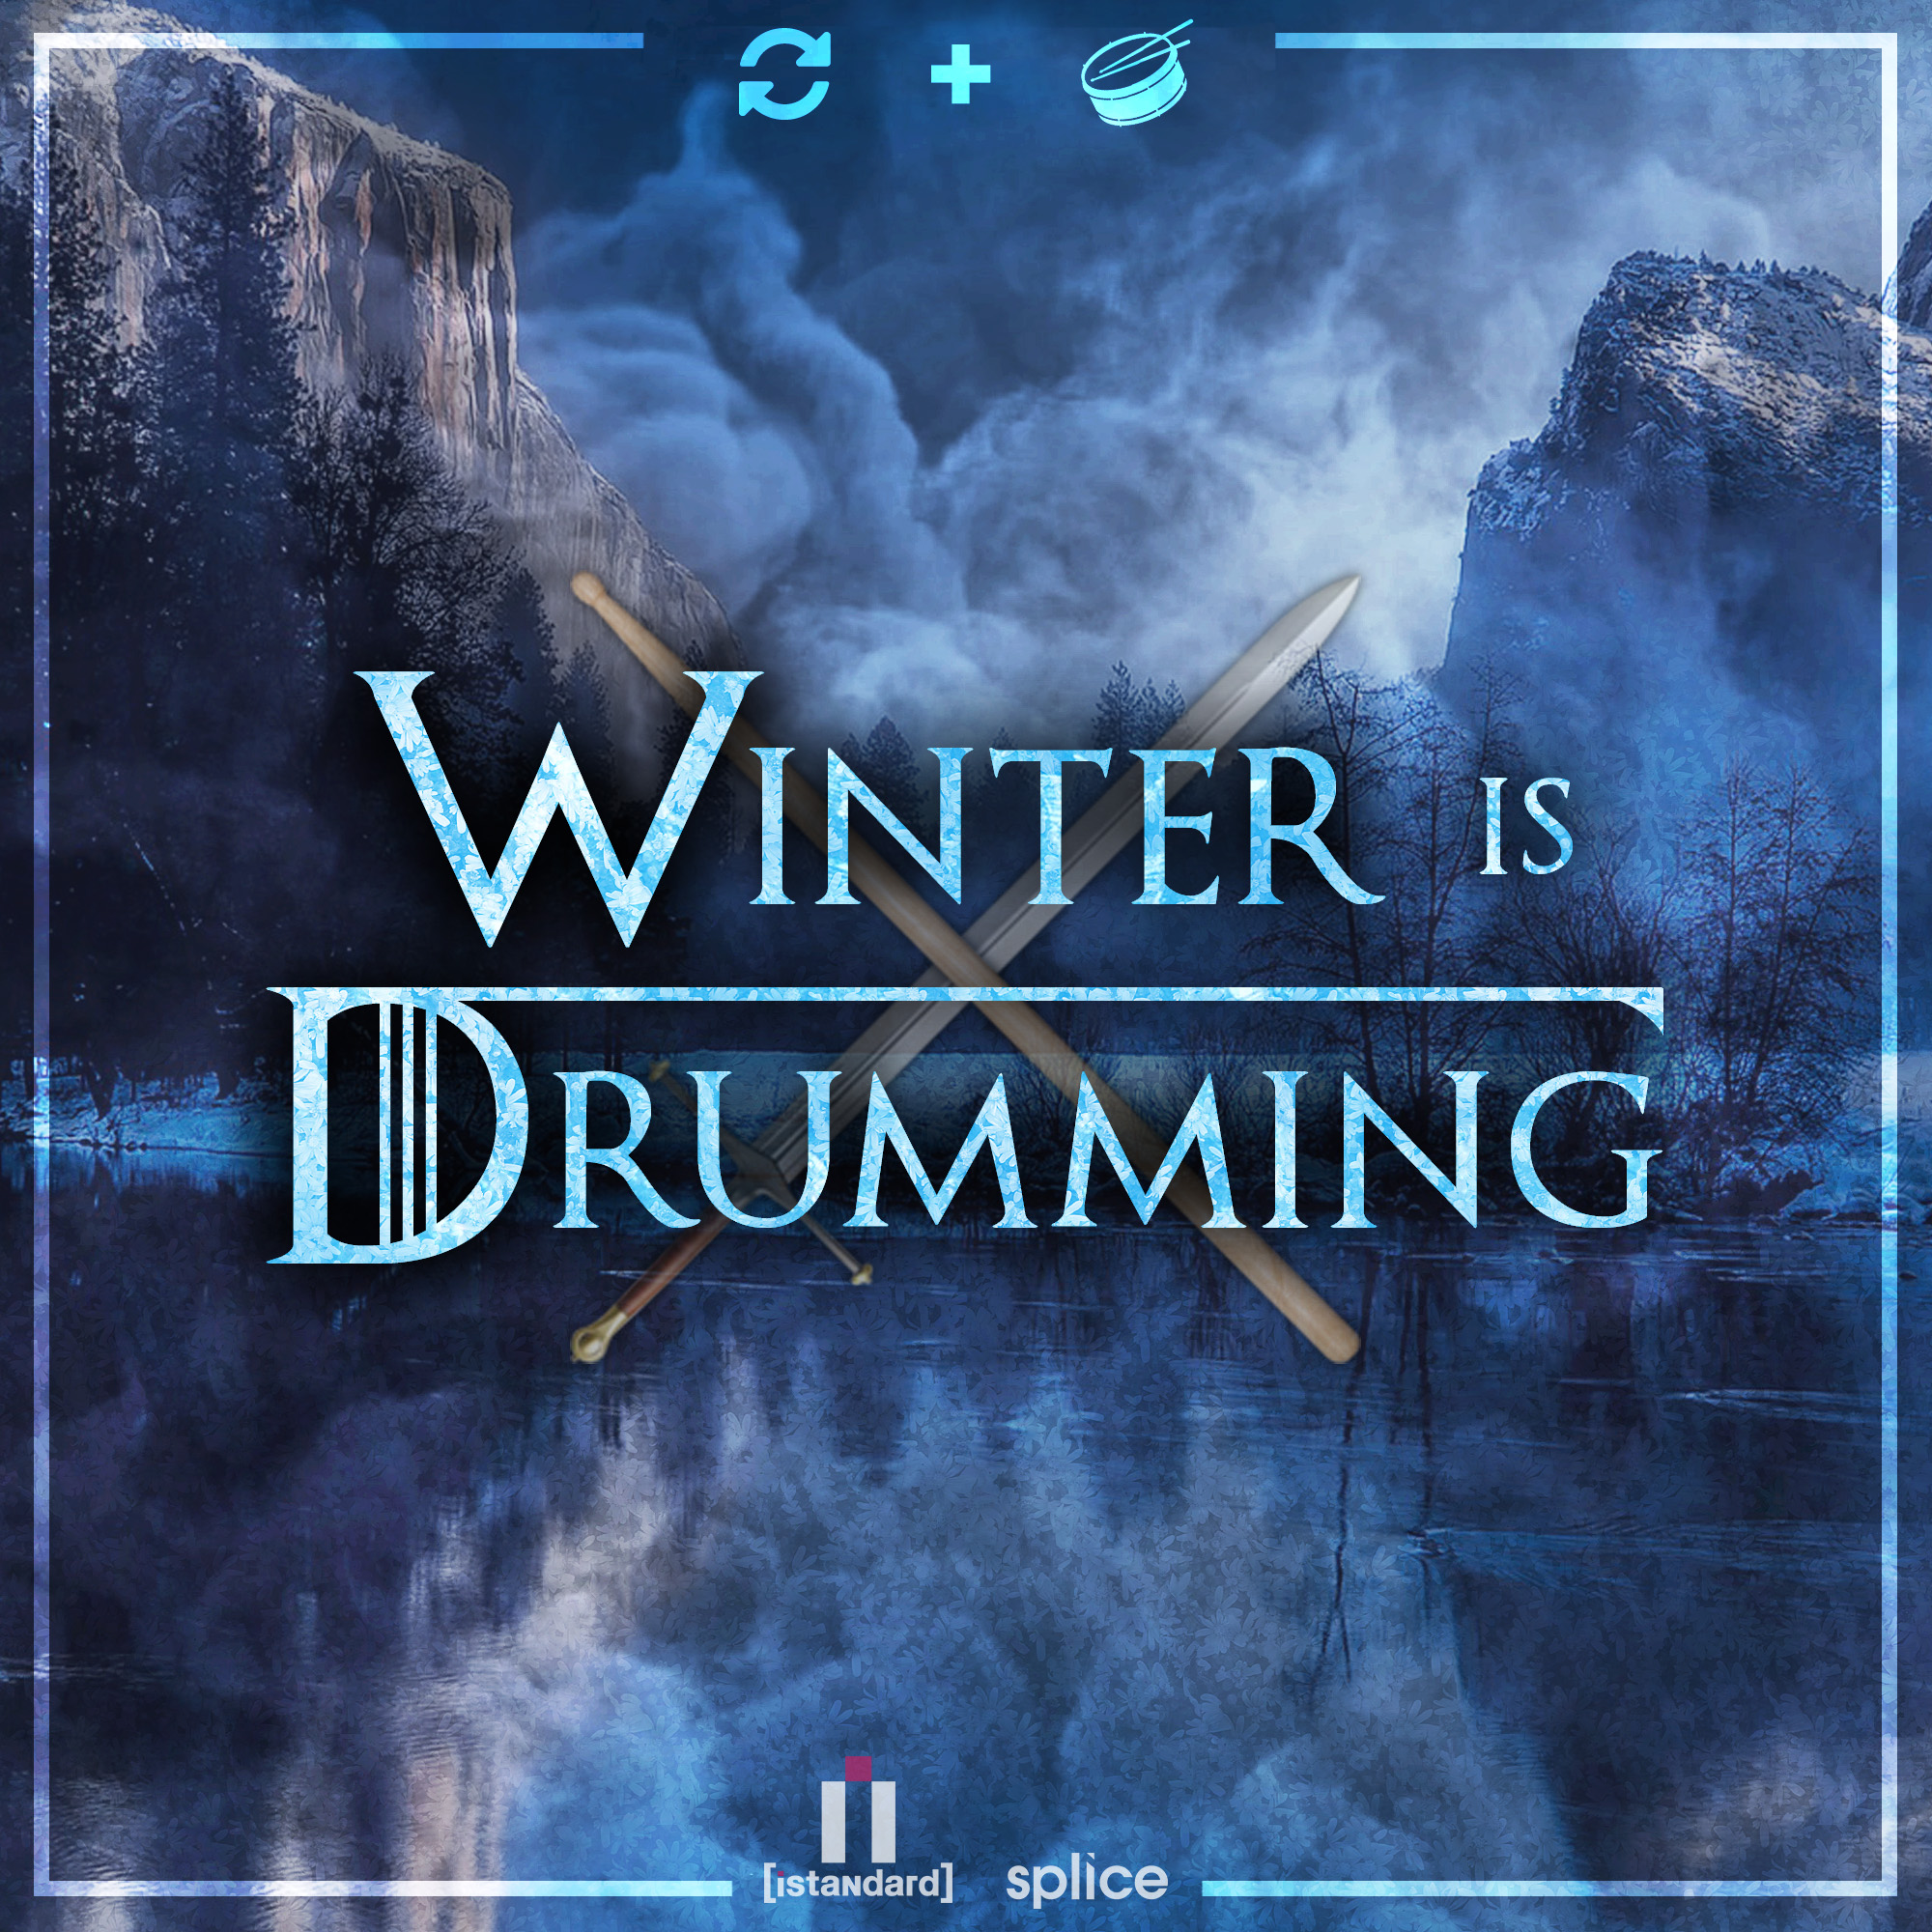 "Winter Is Drumming"